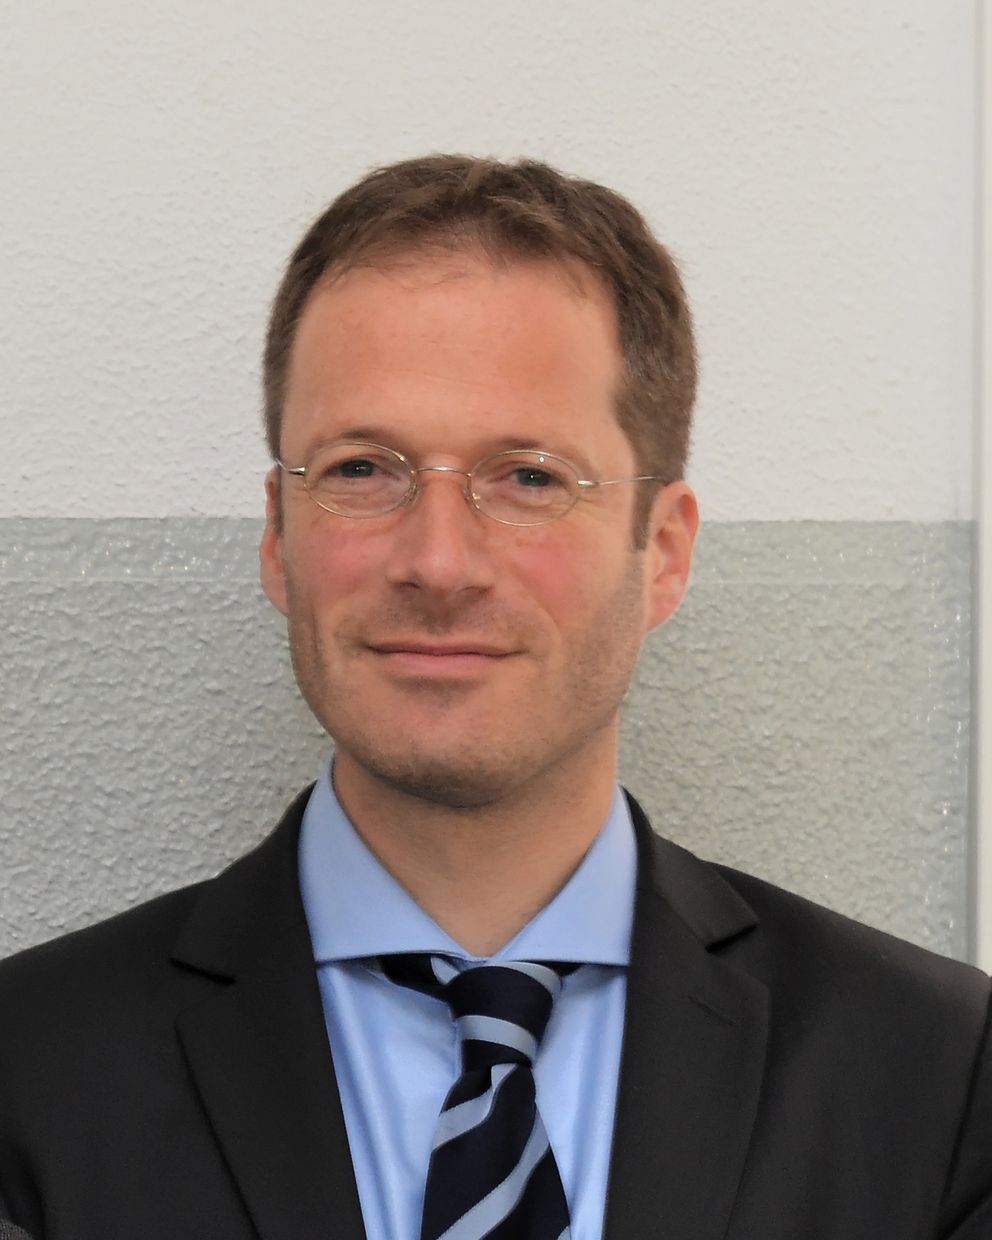 Professor Dr. Andreas von Arnauld